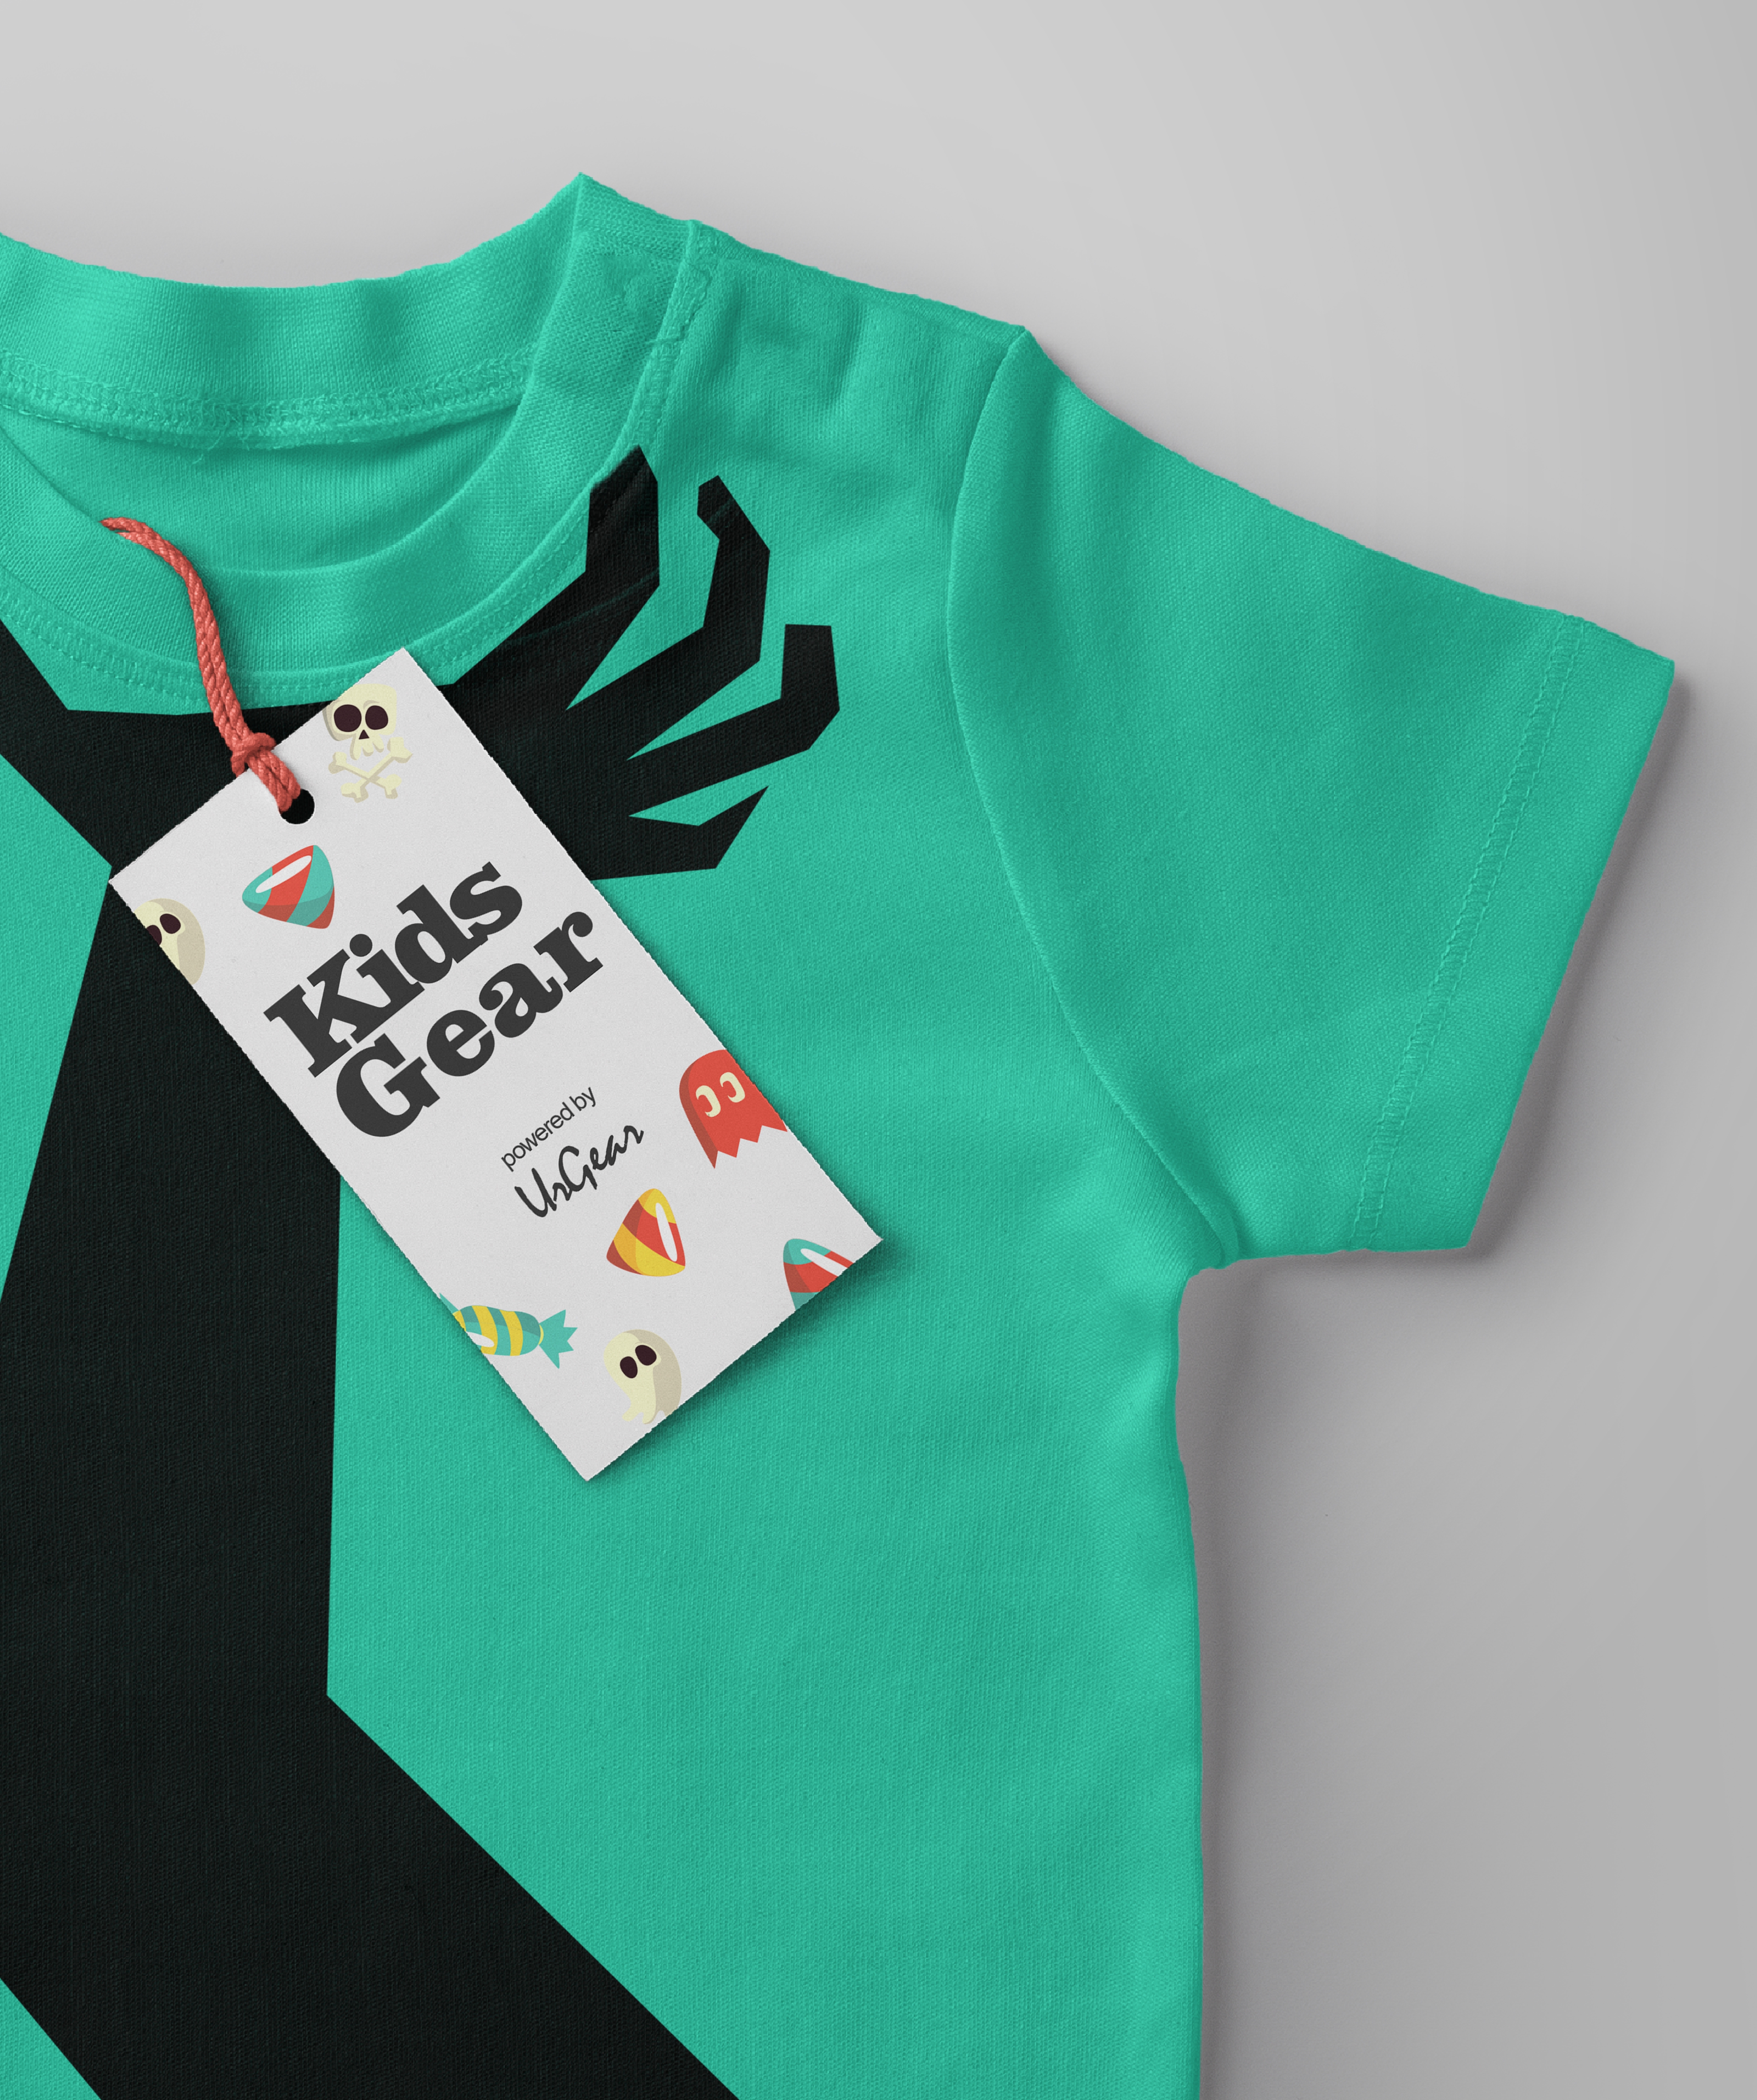 UrGear | UrGear Kids Teal Green Hand Printed Cotton T-Shirt 2